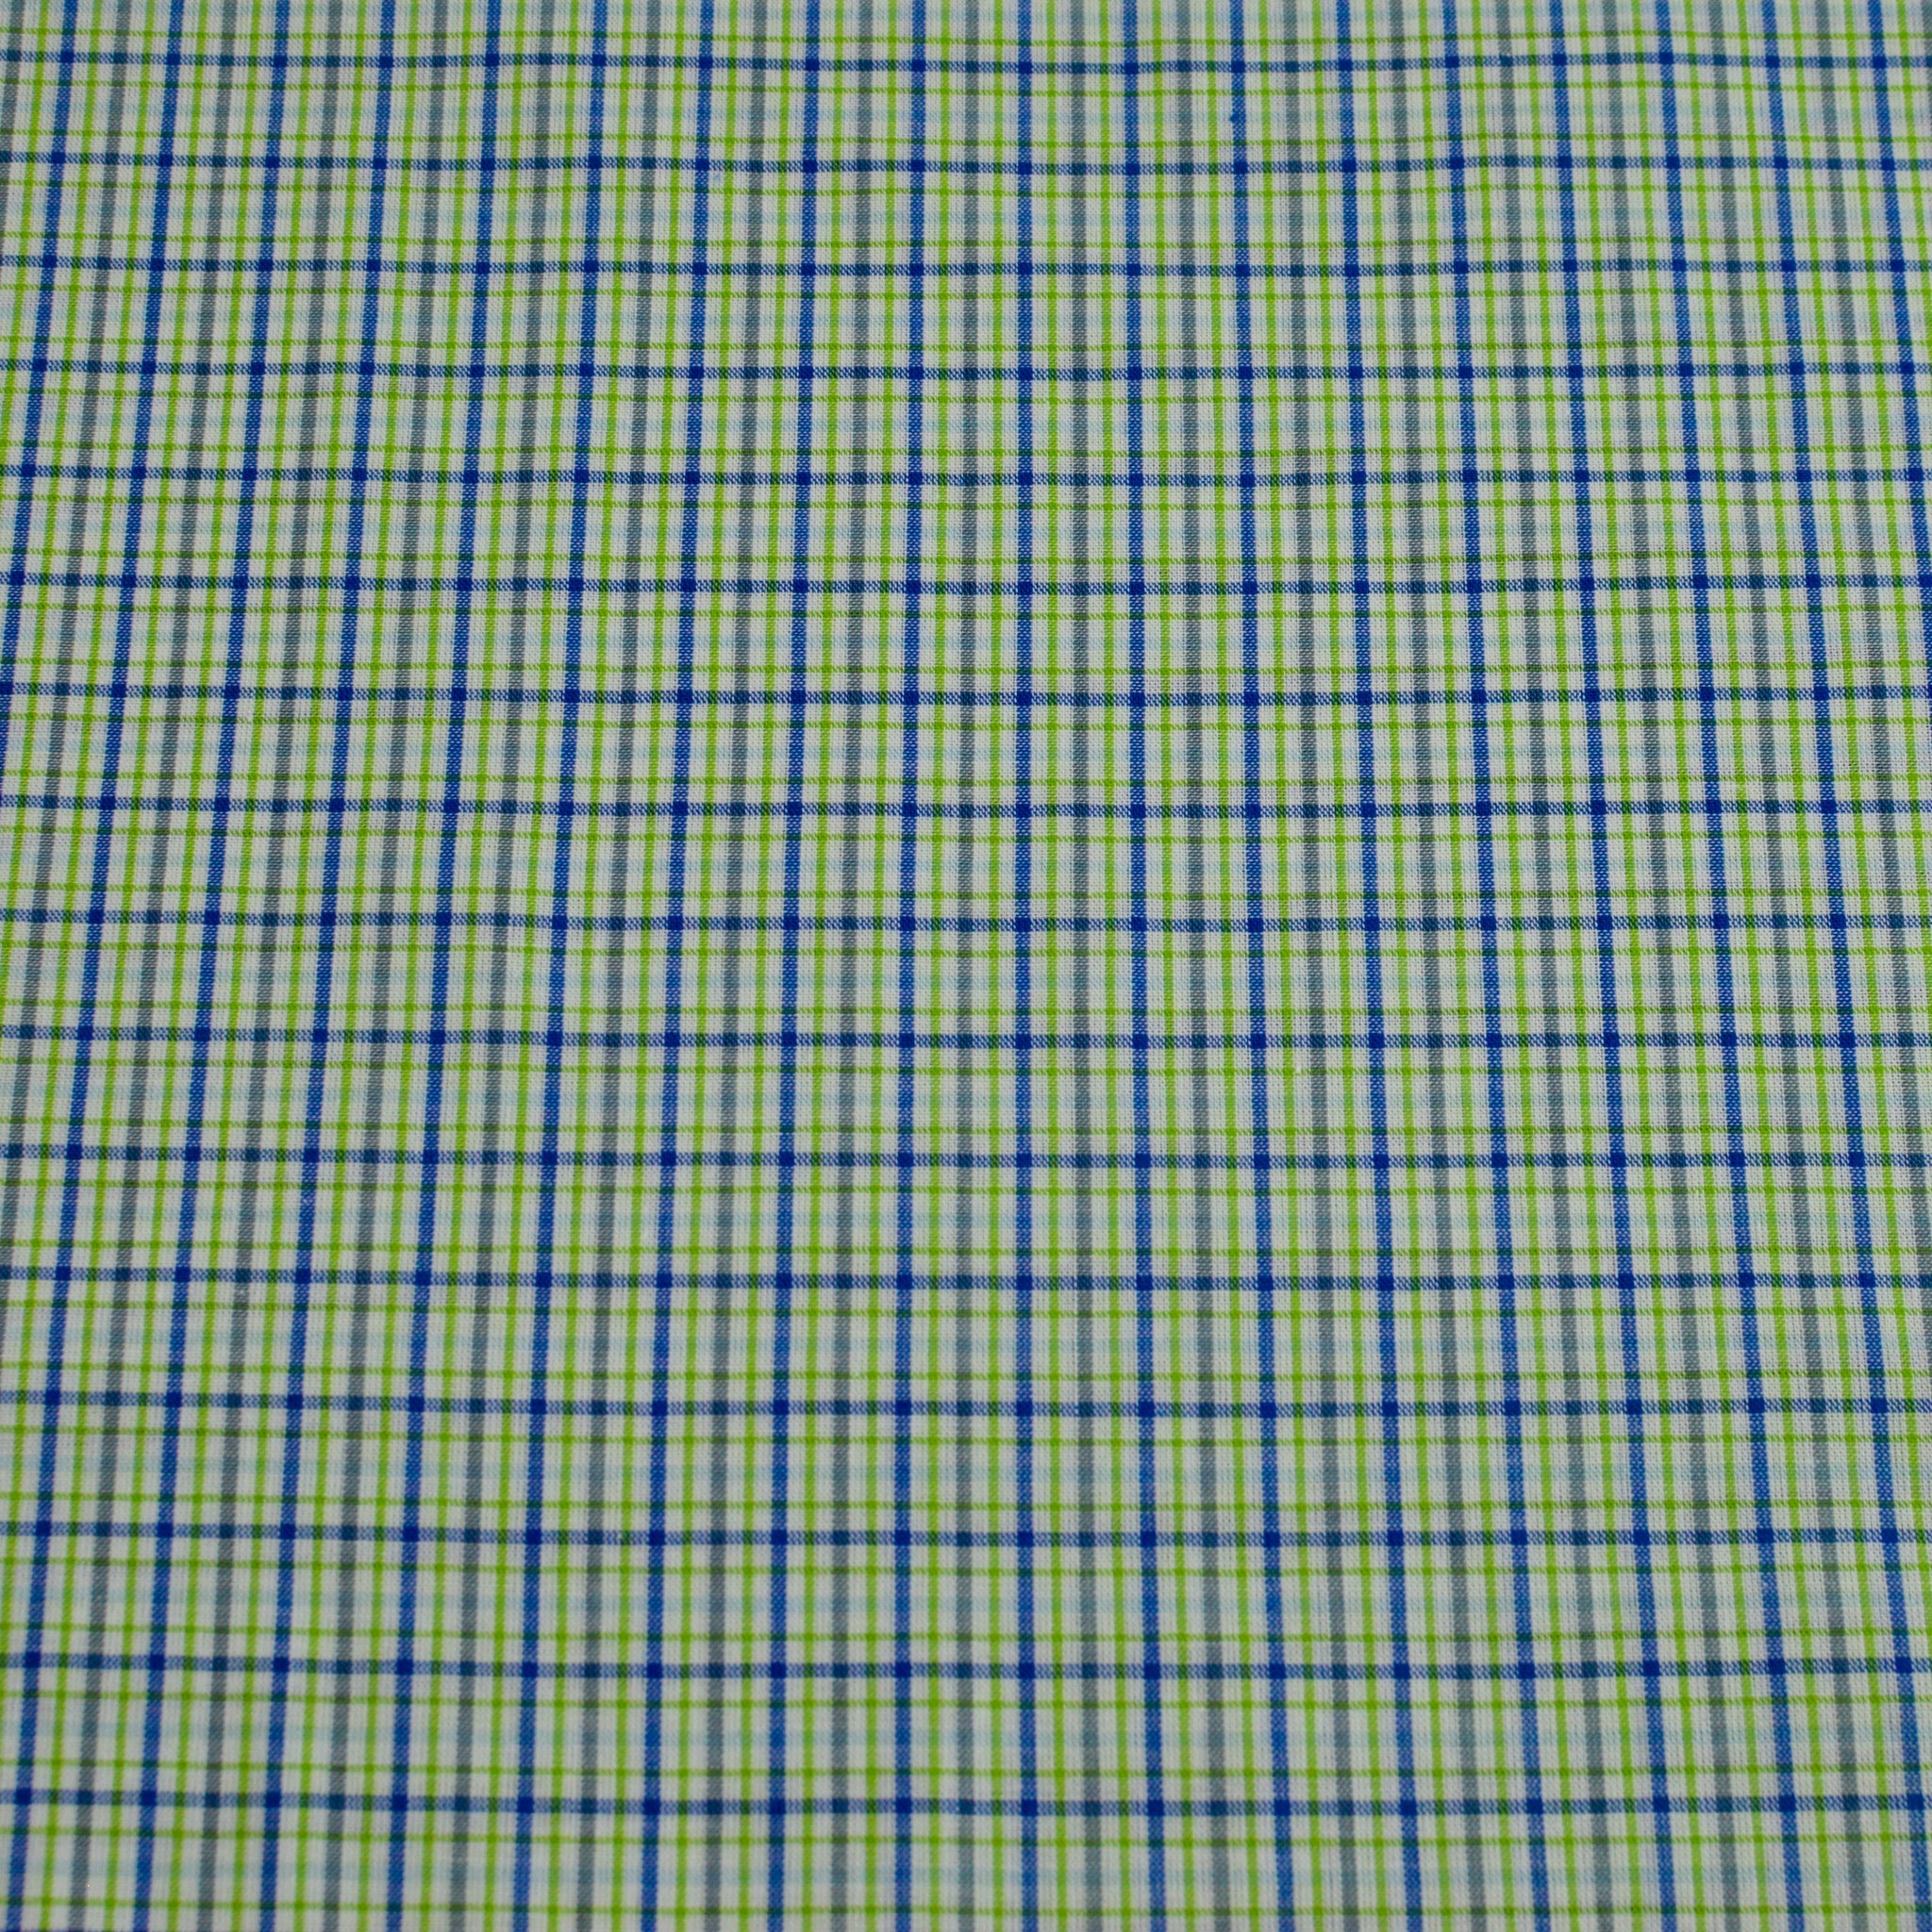 Baumwoll Voile - kariert blau grün Fabric poshpinks